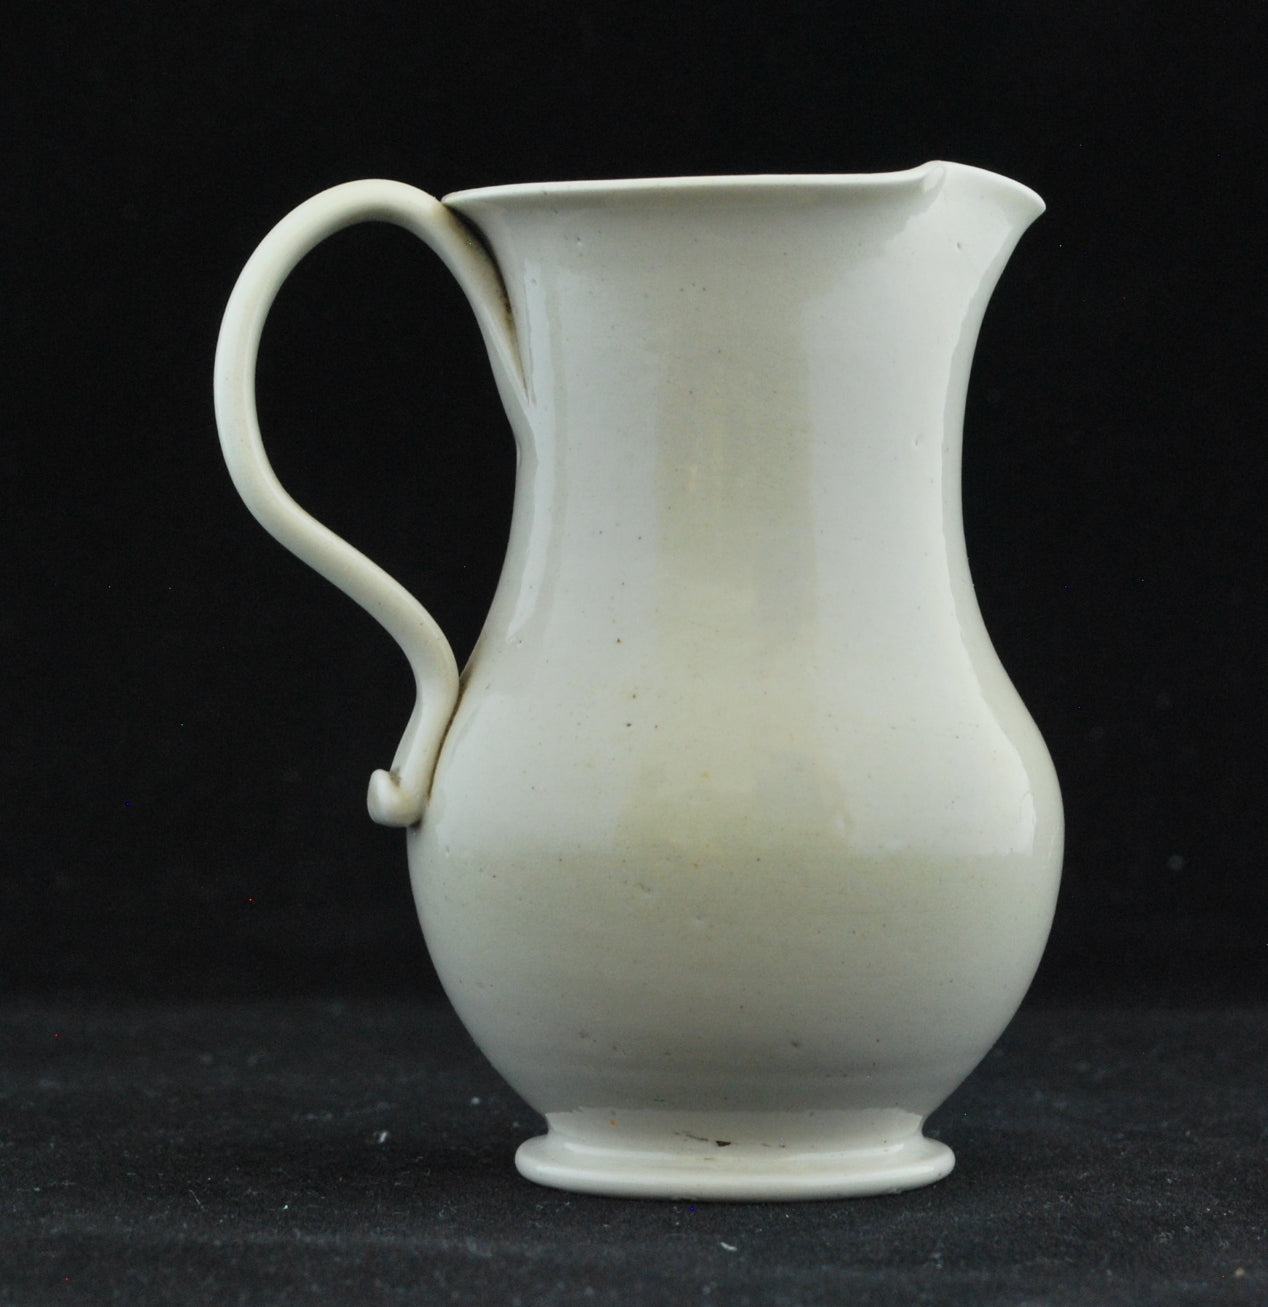 Small white jug